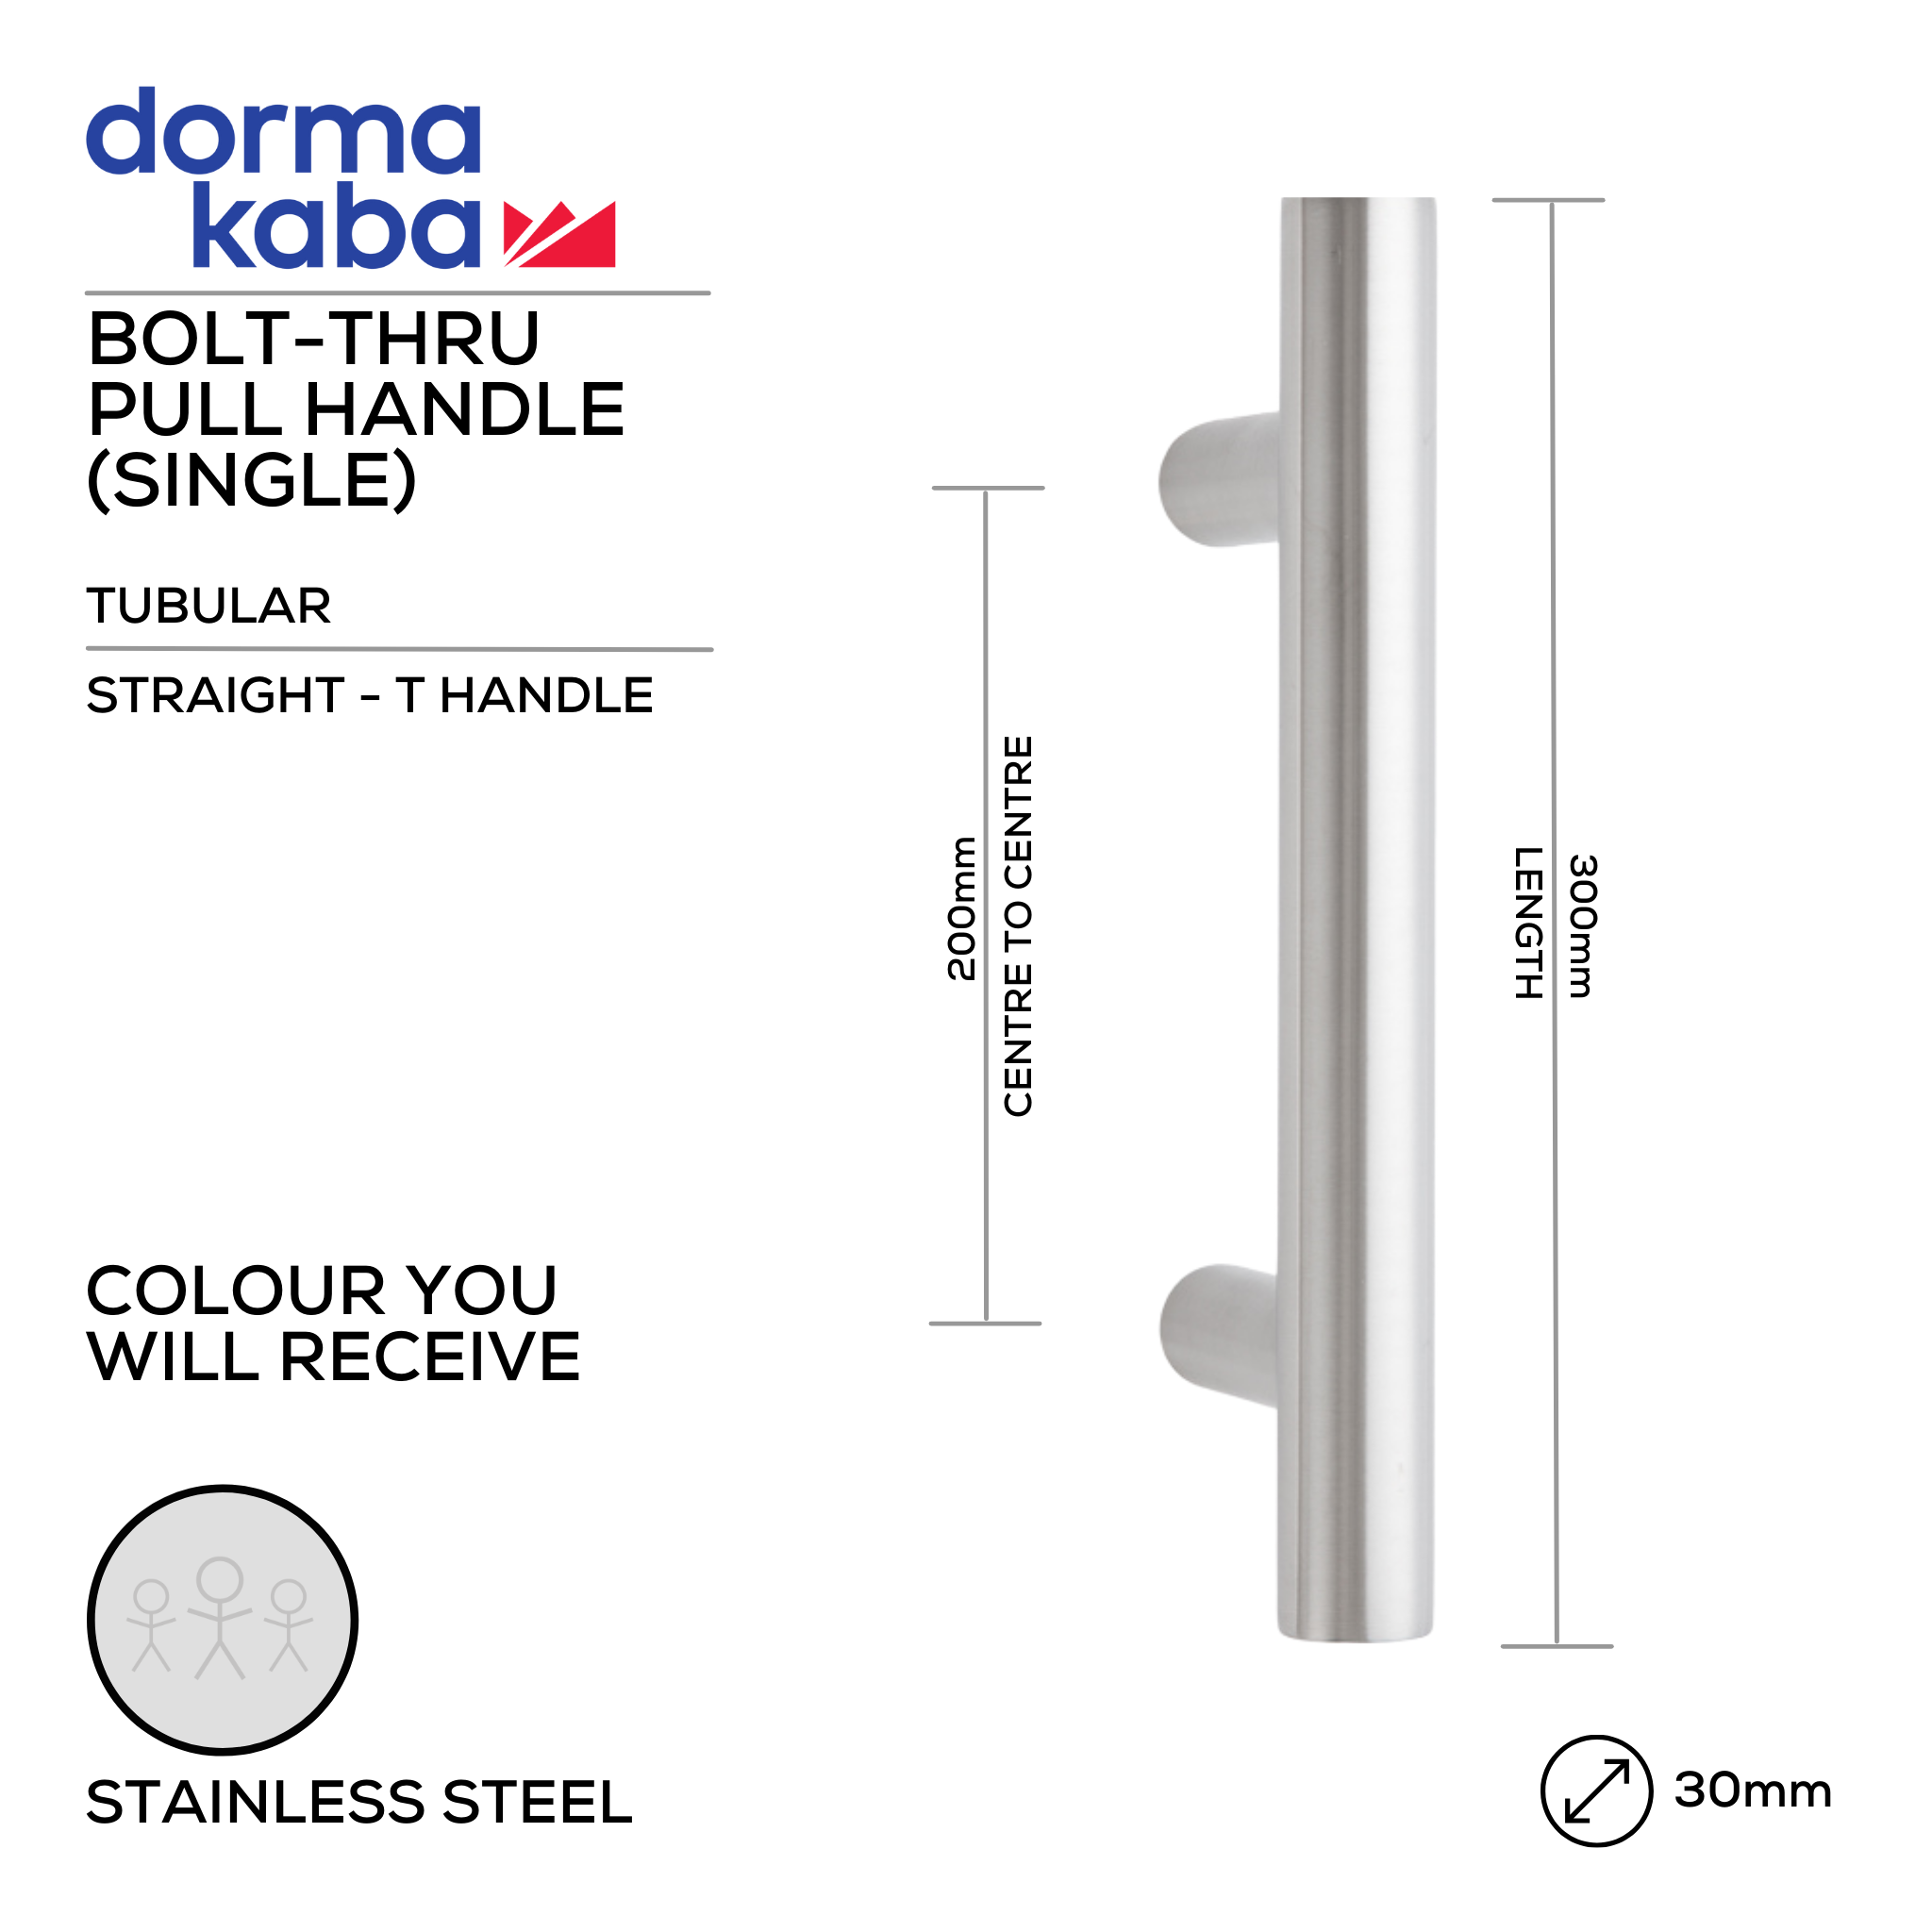 DPH 210 BT, Pull Handle, Tubular, Straight, T Handle, BoltThru, 30mm (Ø) x 300mm (l) x 200mm (ctc), Stainless Steel, DORMAKABA